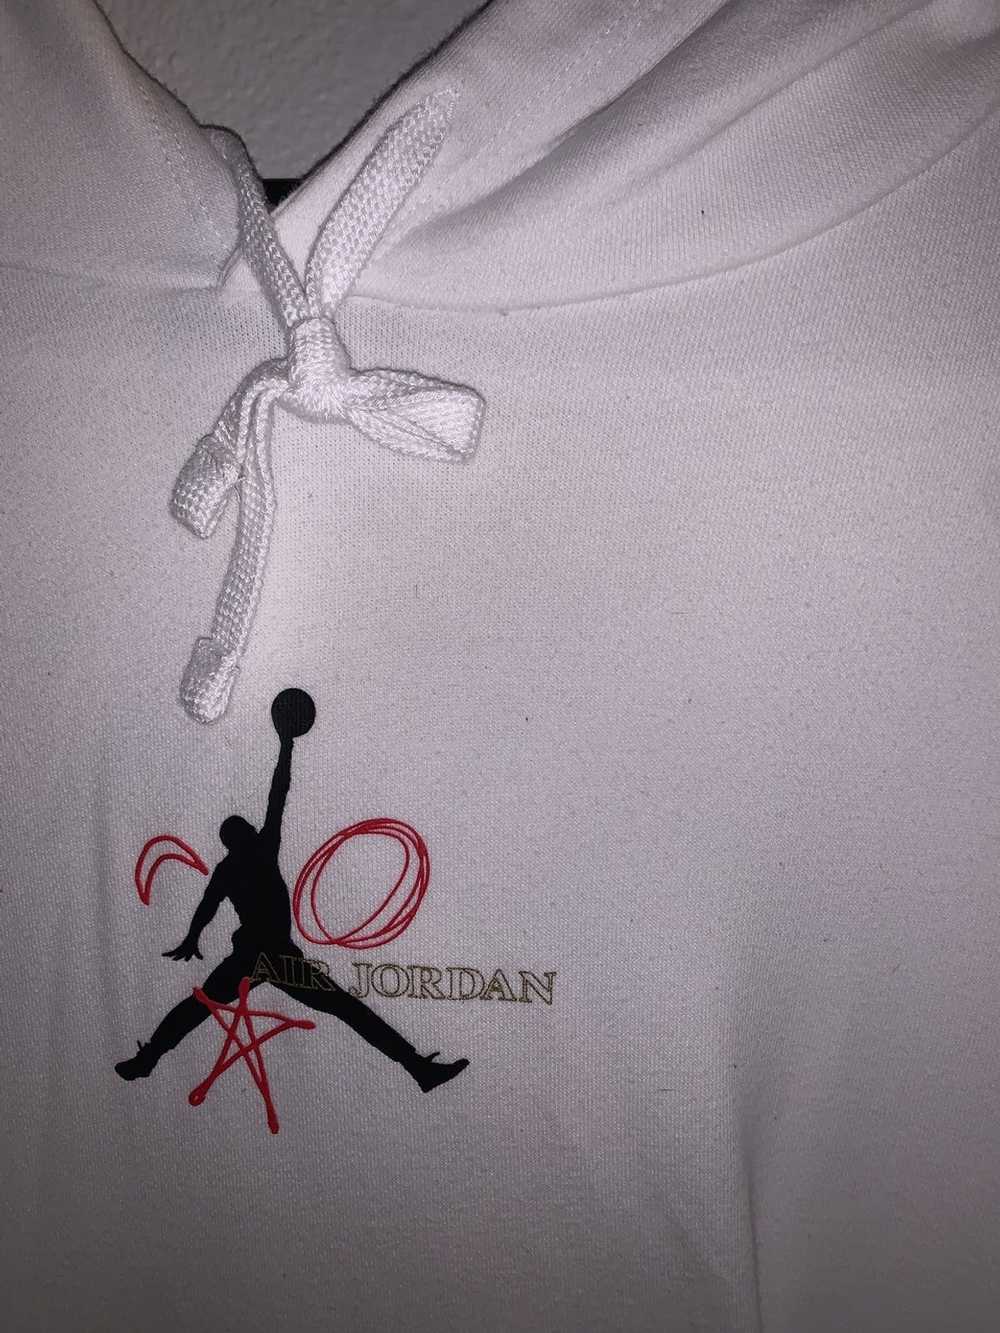 Jordan Brand × Nike Air Jordan White Hoodie - image 5